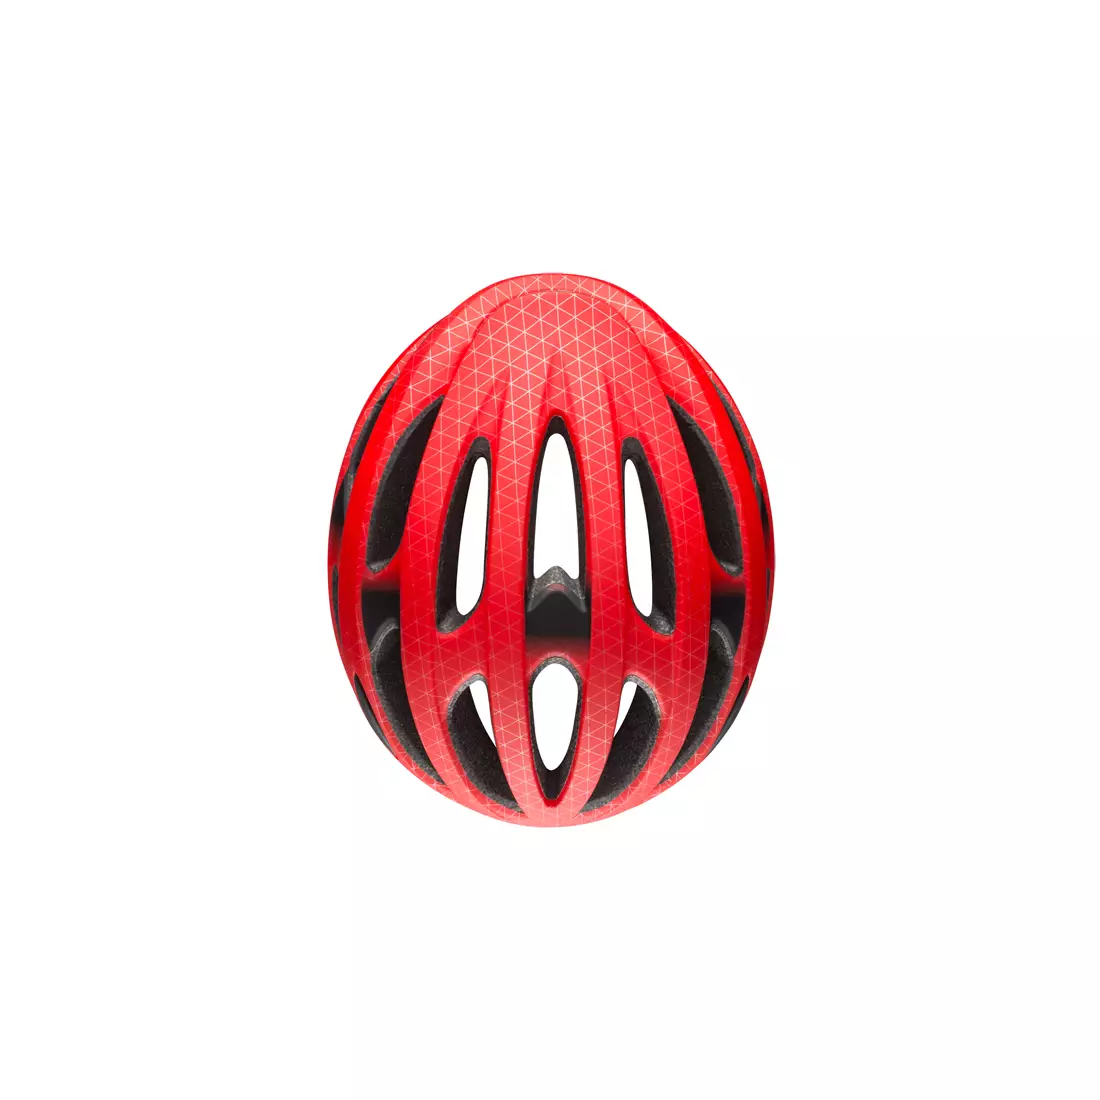 BELL FORMULA MIPS BEL-7088536 bicycle helmet matte red black